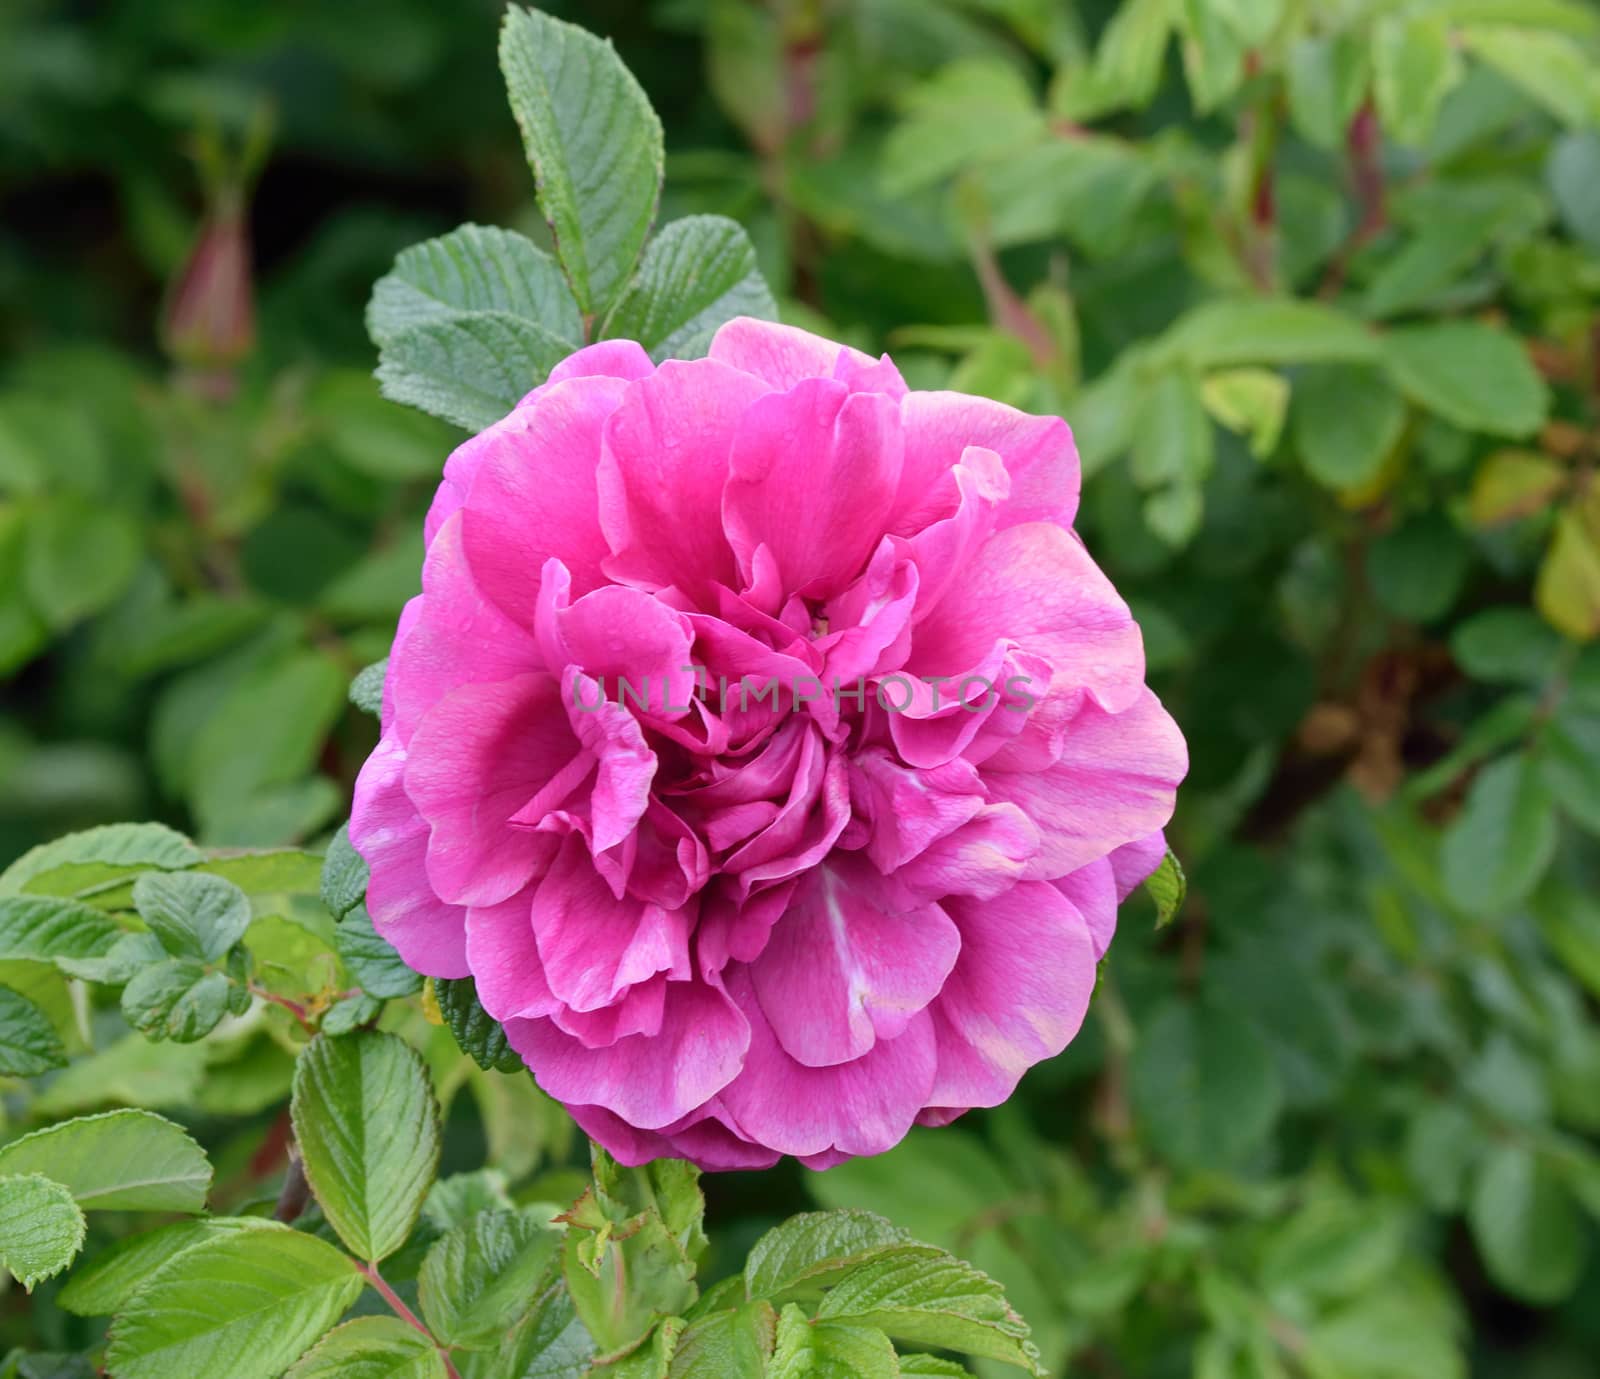 Rugosa rose bush by george_stevenson